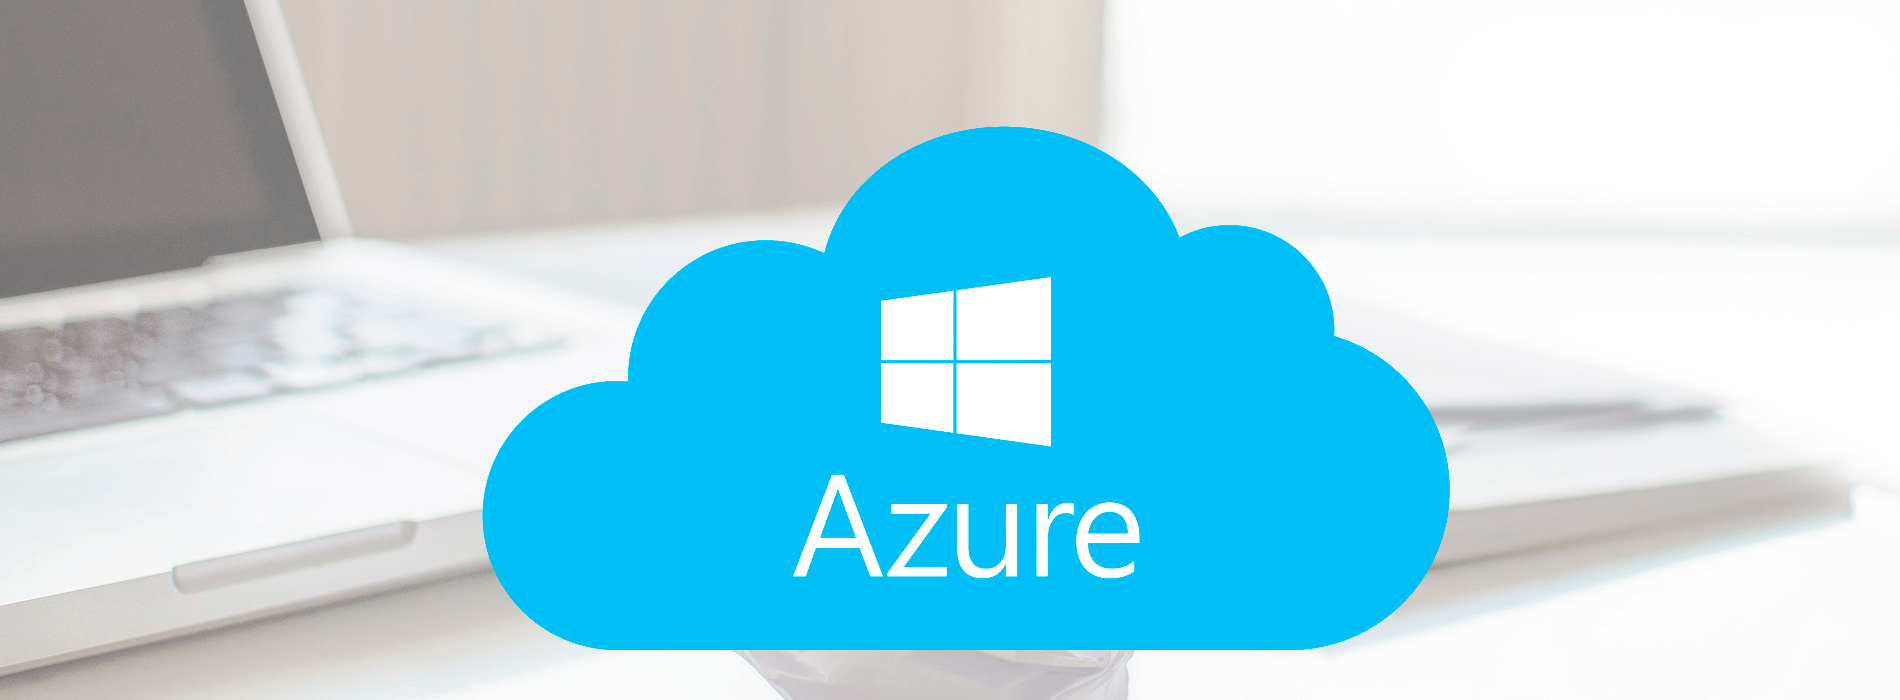 Microsoft AZURE - Suite cloud computing de Microsoft